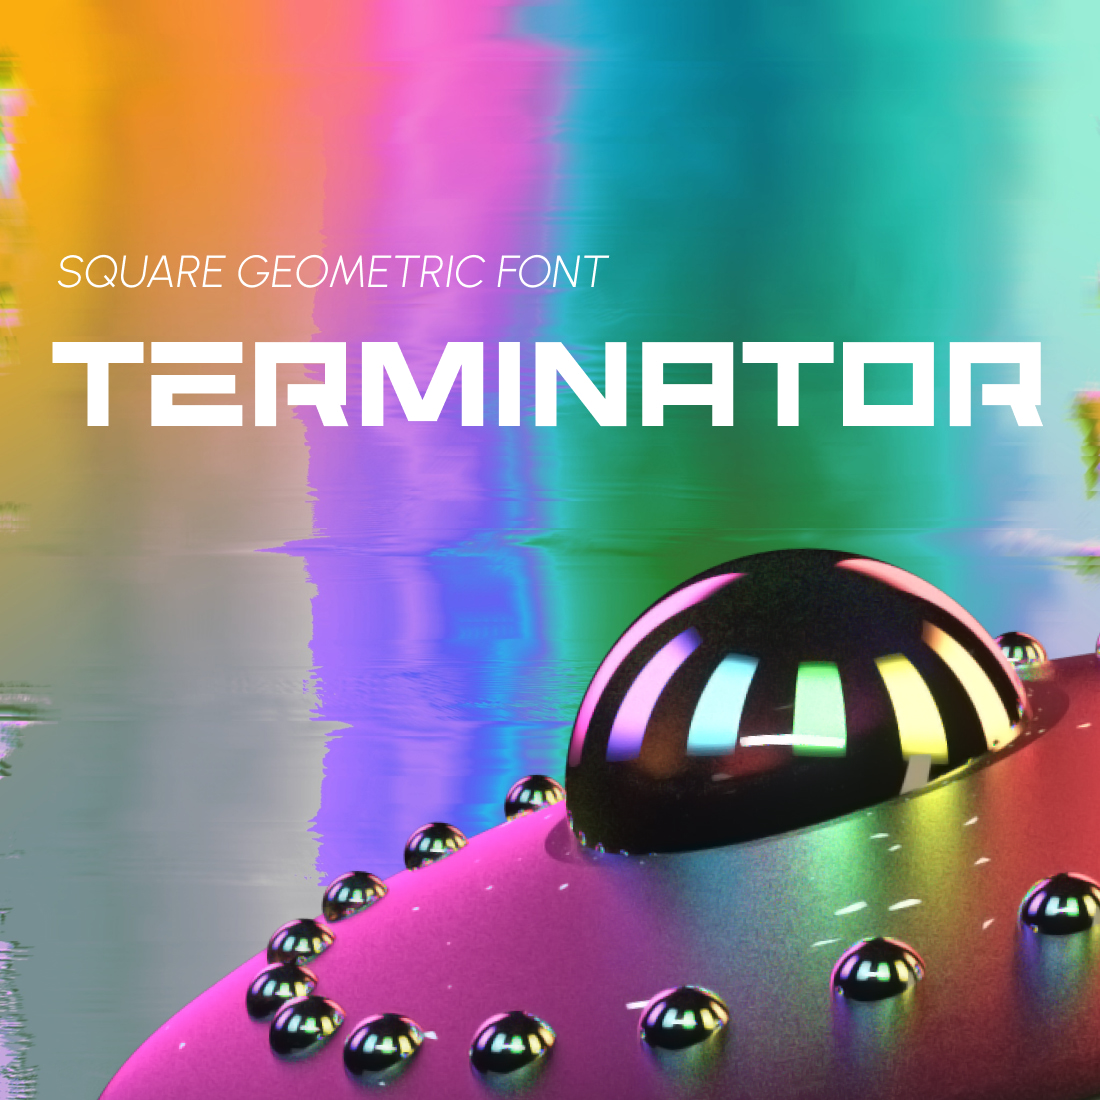 Terminator font title image.